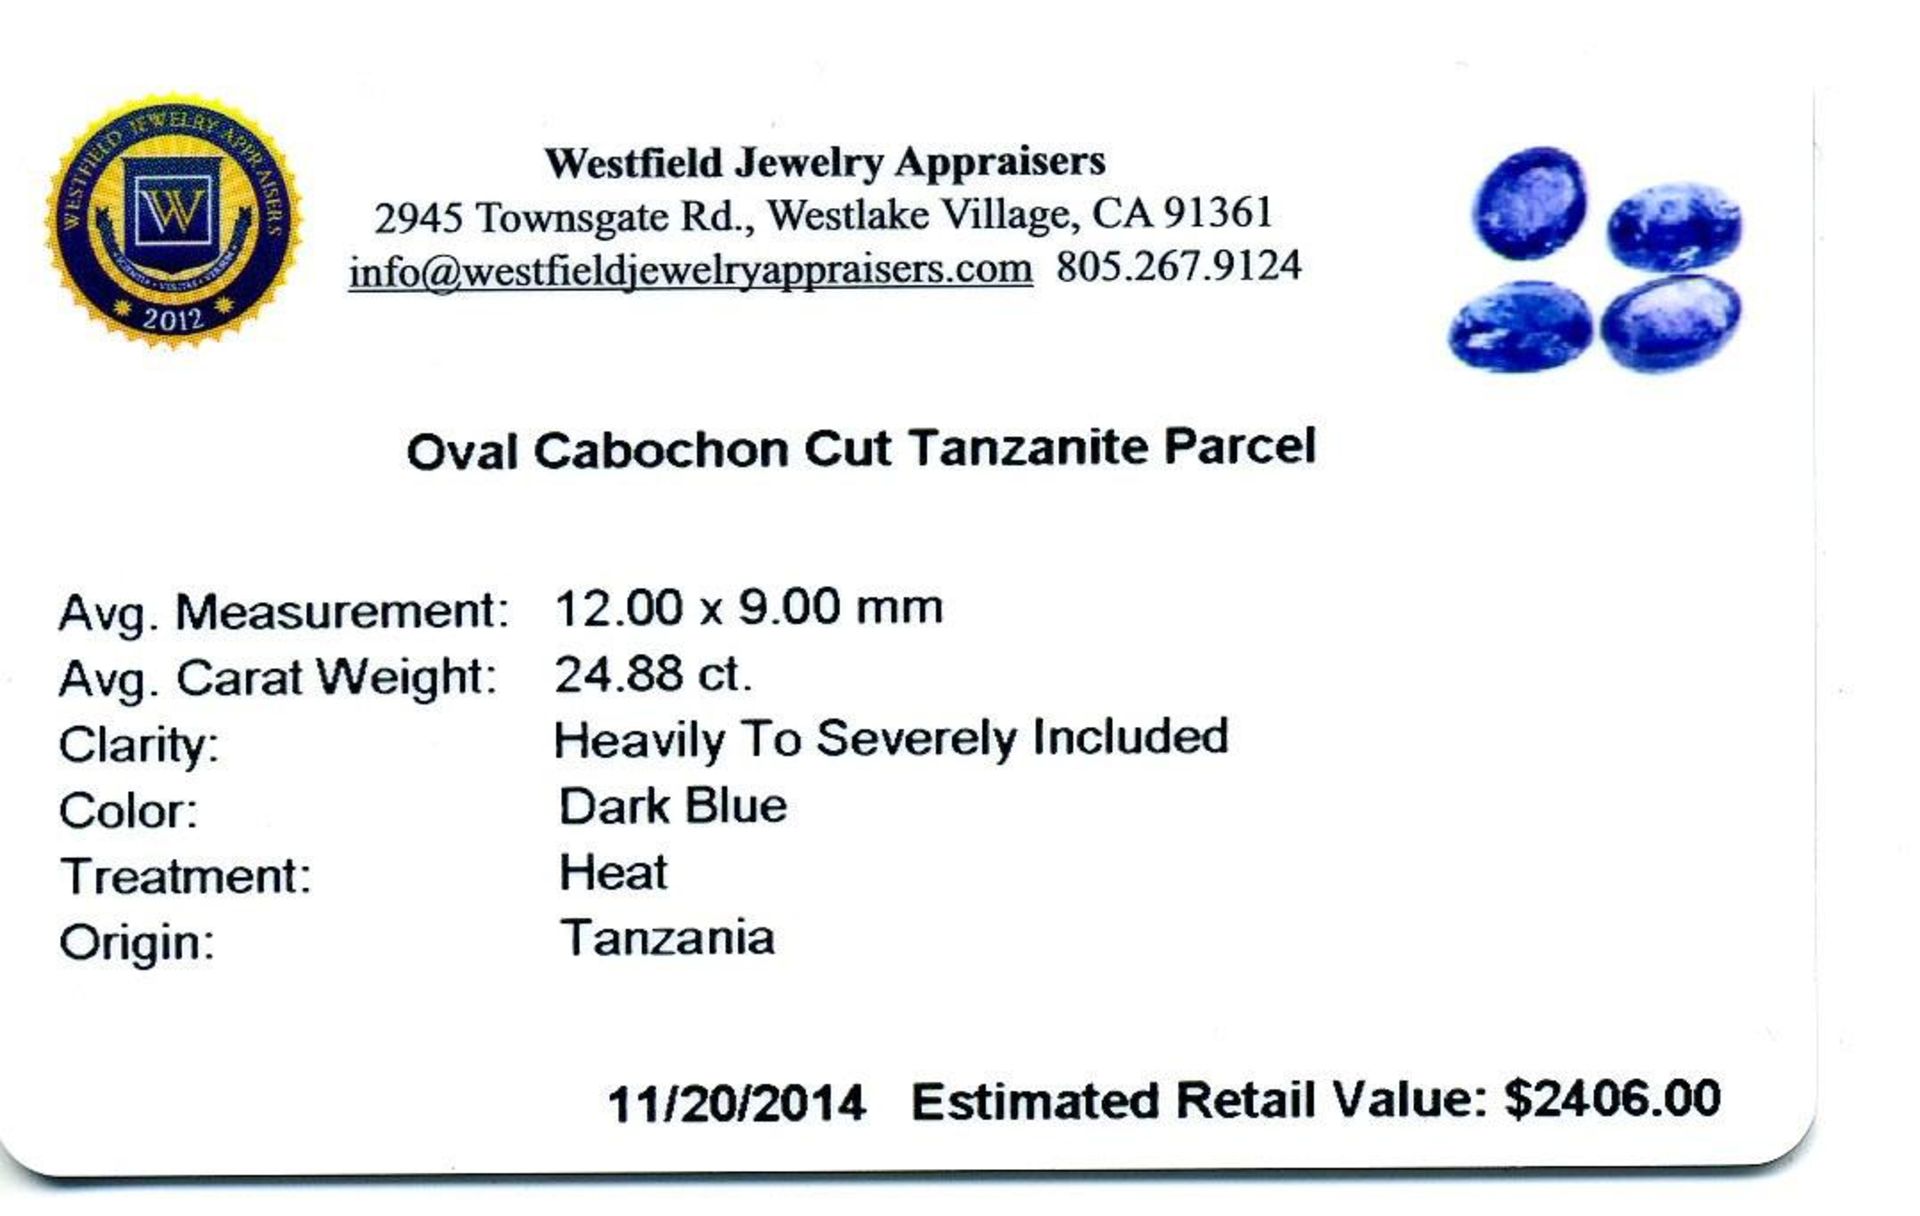 24.88 ctw. Oval Cabochon Cut Tanzanite Parcel - Image 2 of 2